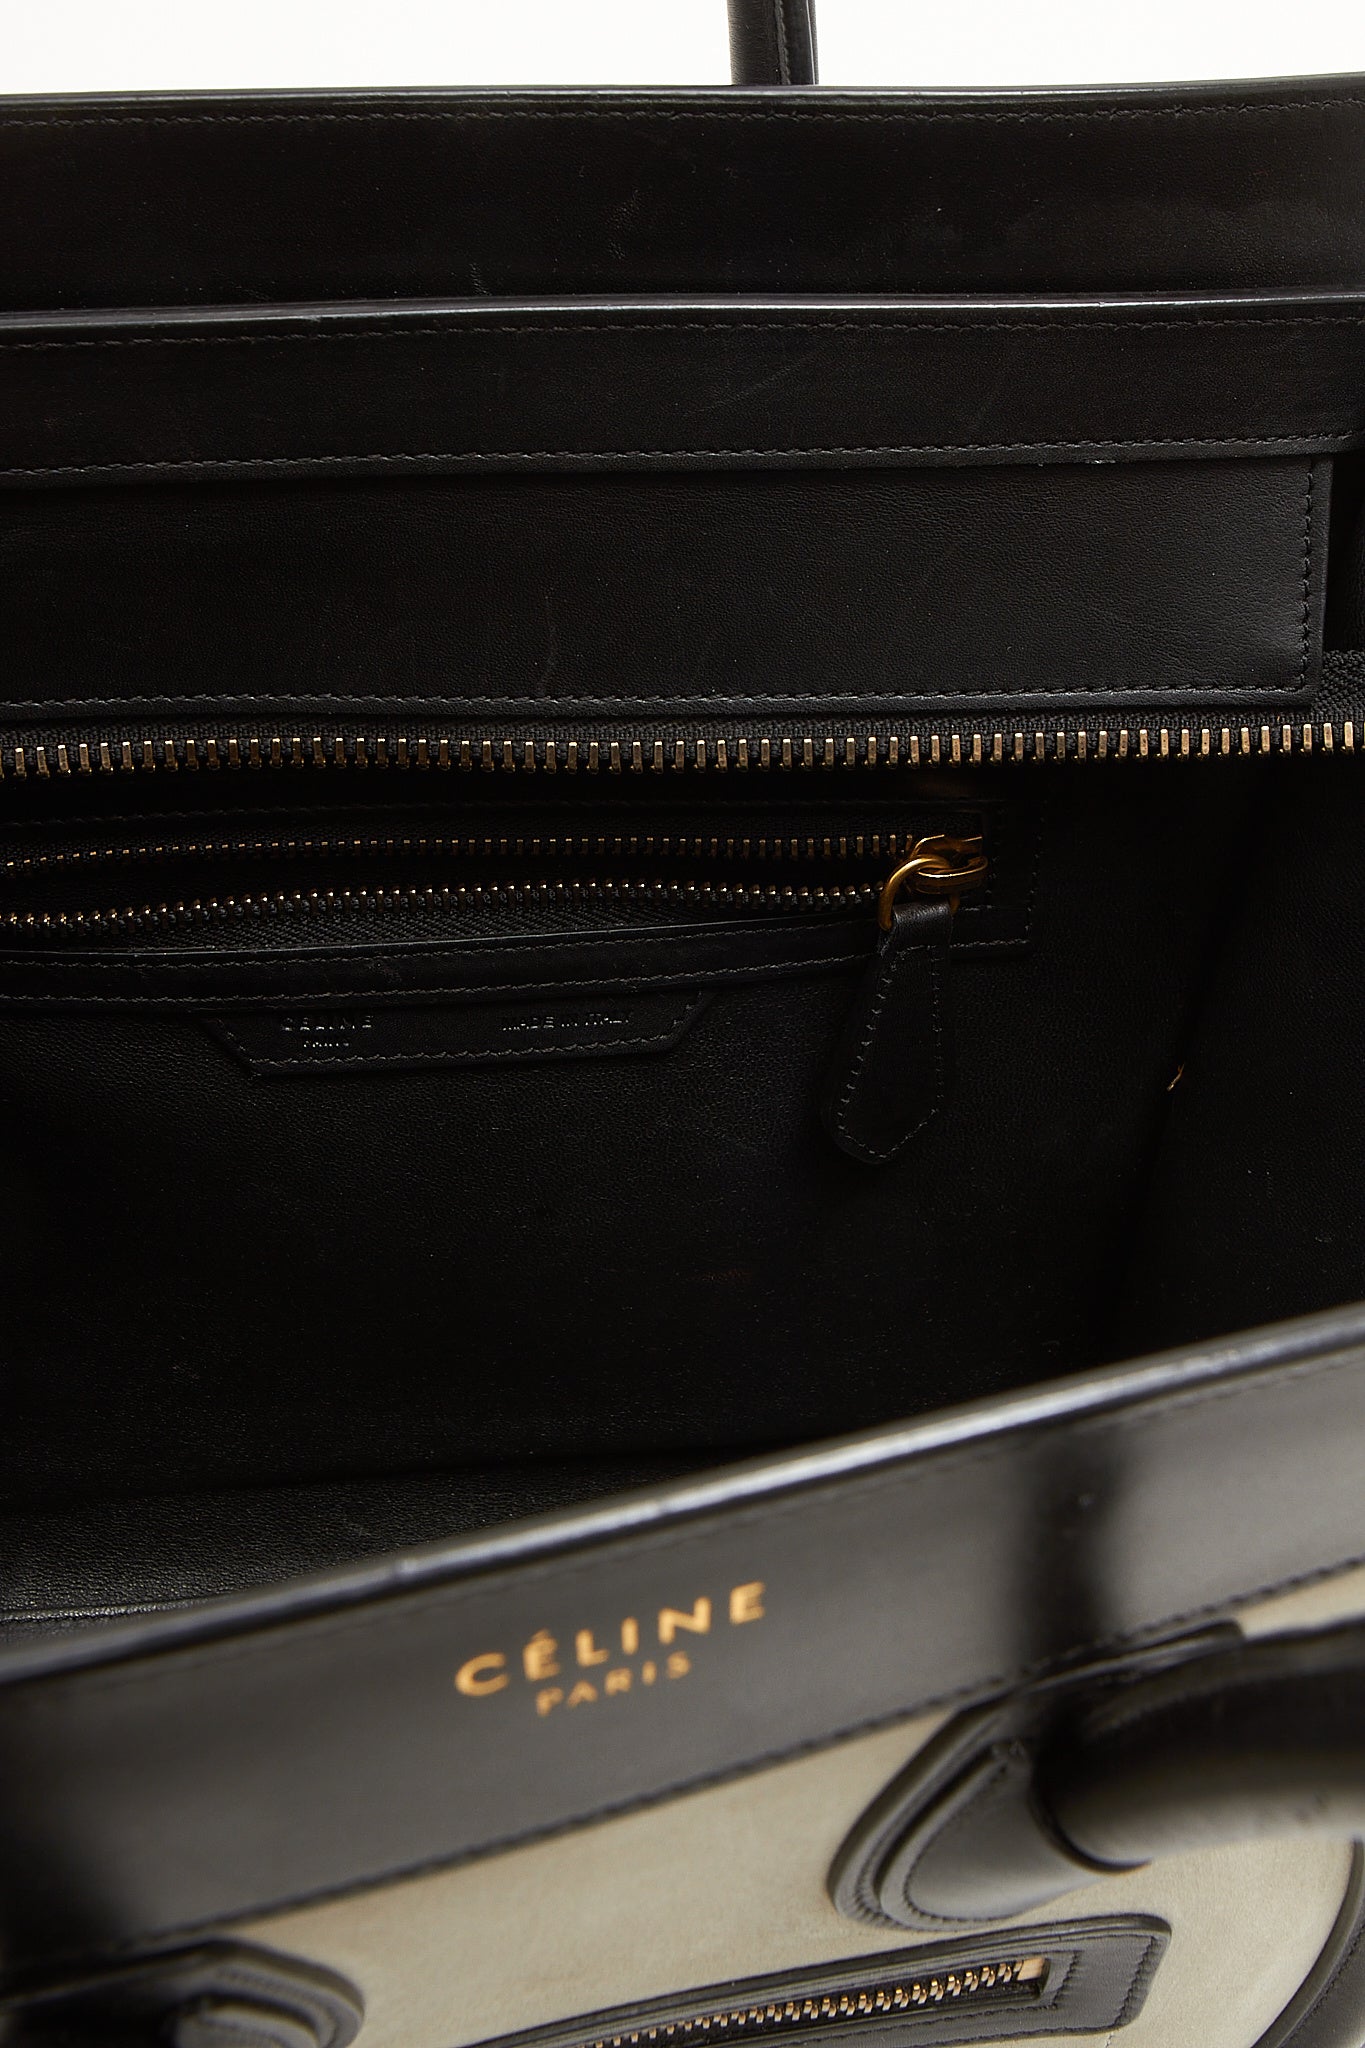 Celine Tri-Color Leather Micro Luggage Tote Bag